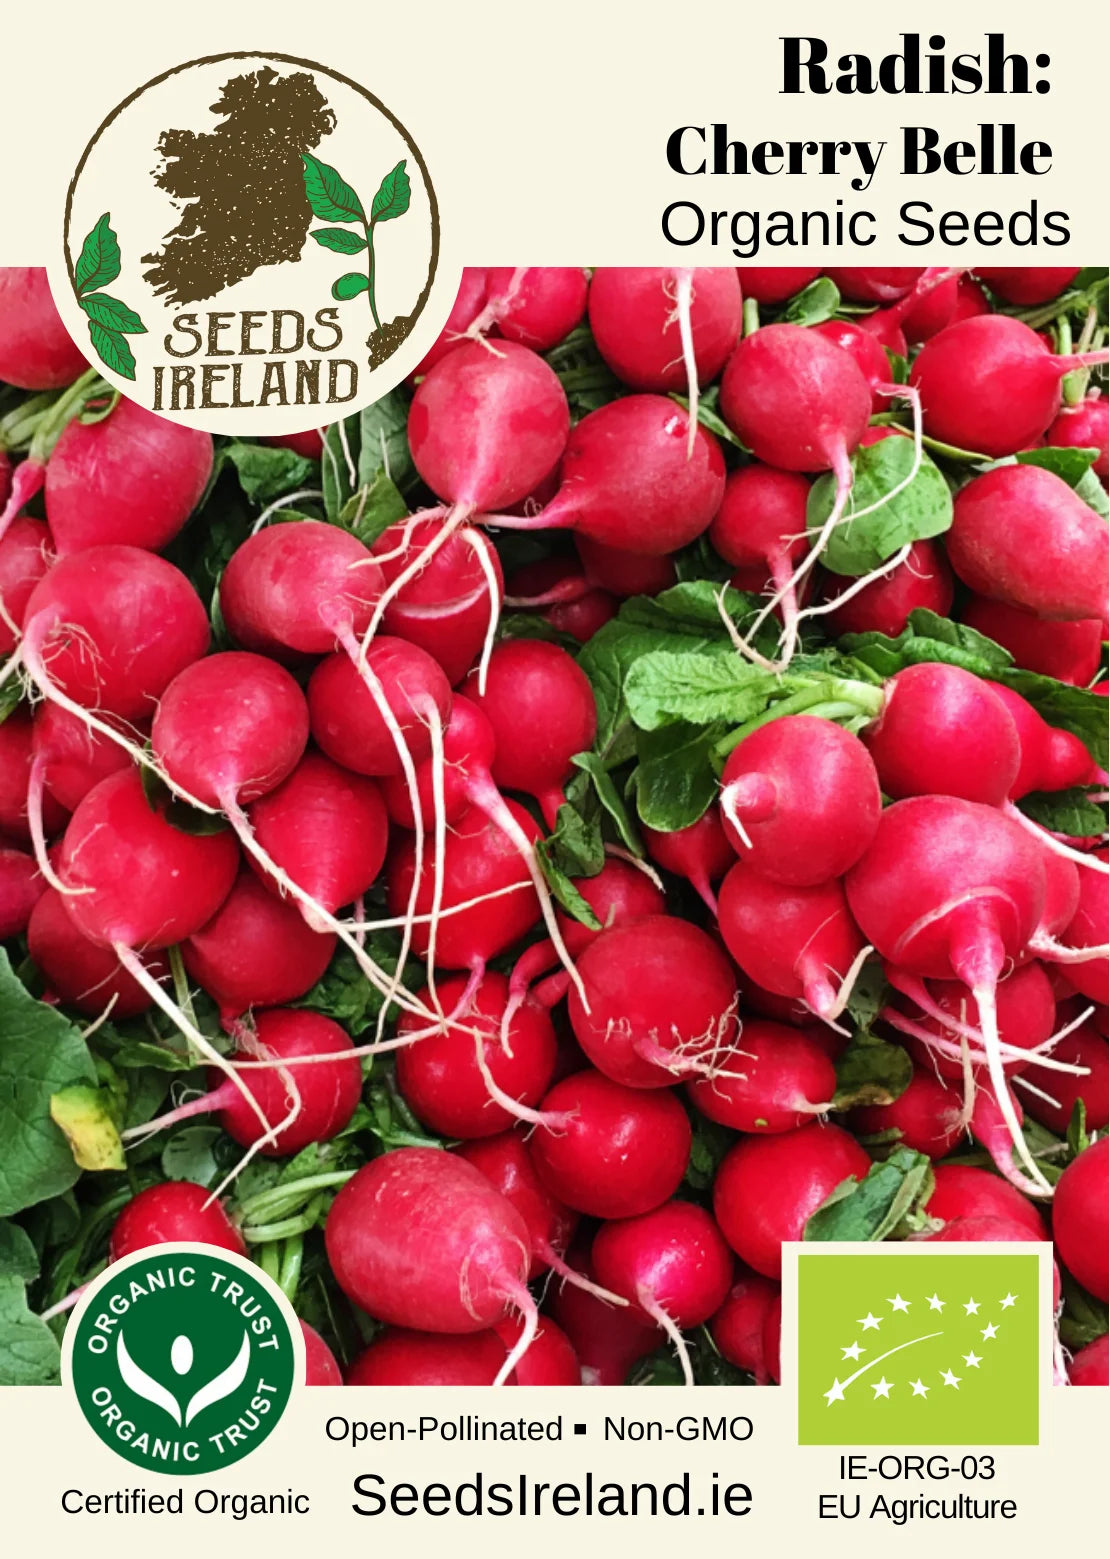 Radish: Cherry Belle Organic Seed